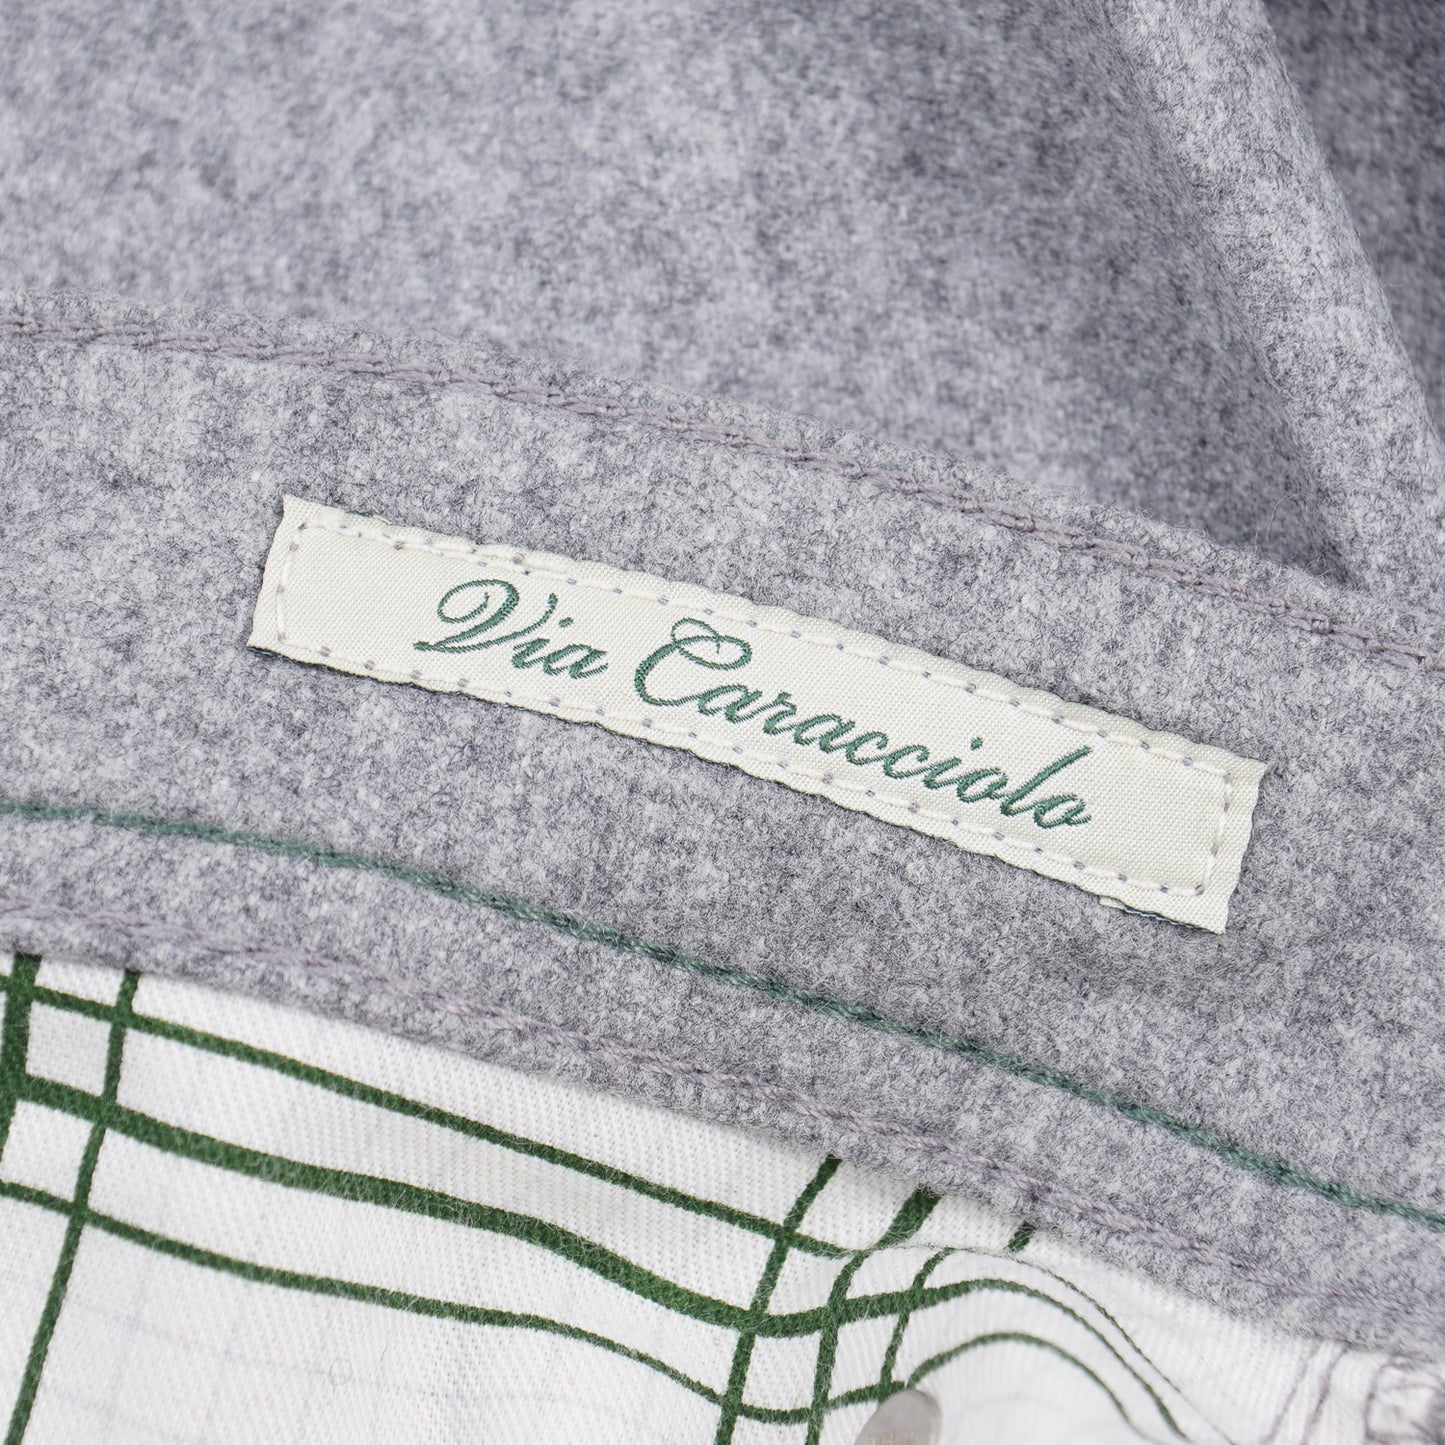 Luigi Borrelli Wool 5-Pocket Pants - Top Shelf Apparel